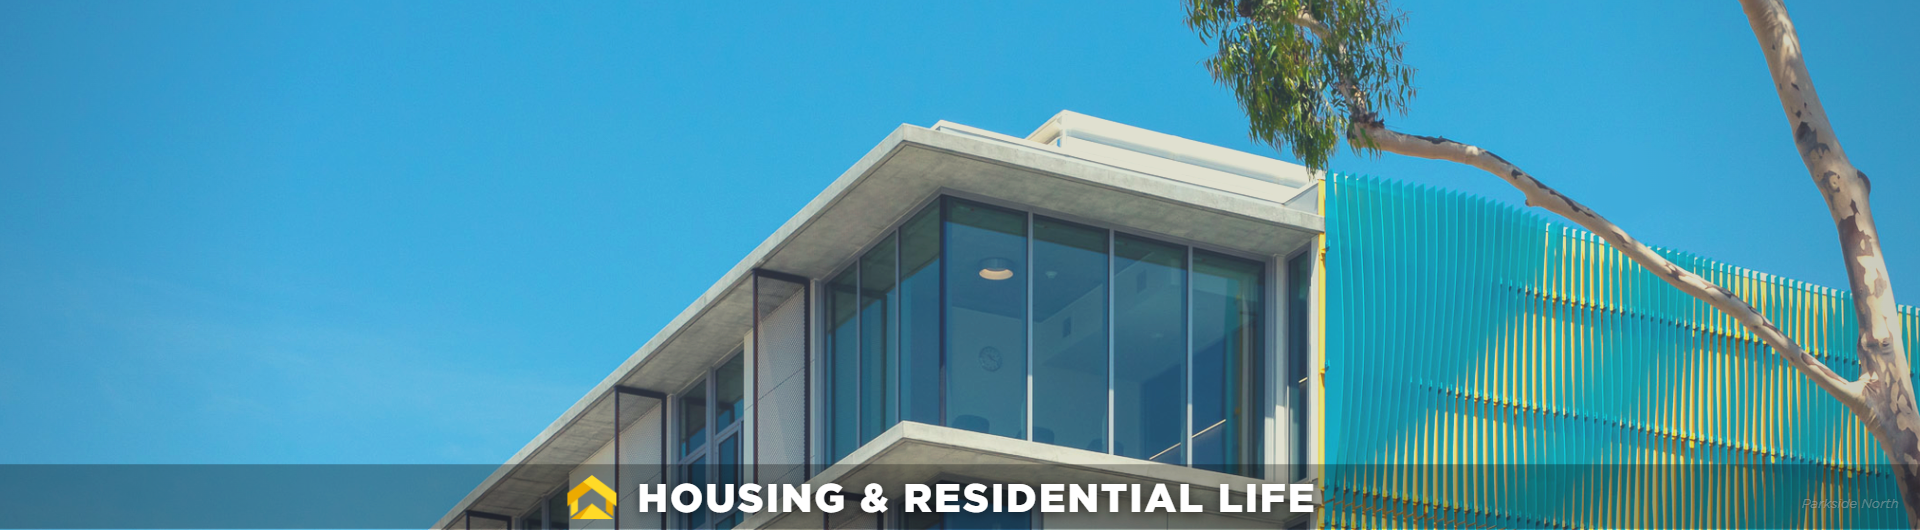 University Housing & Residential Life California State University